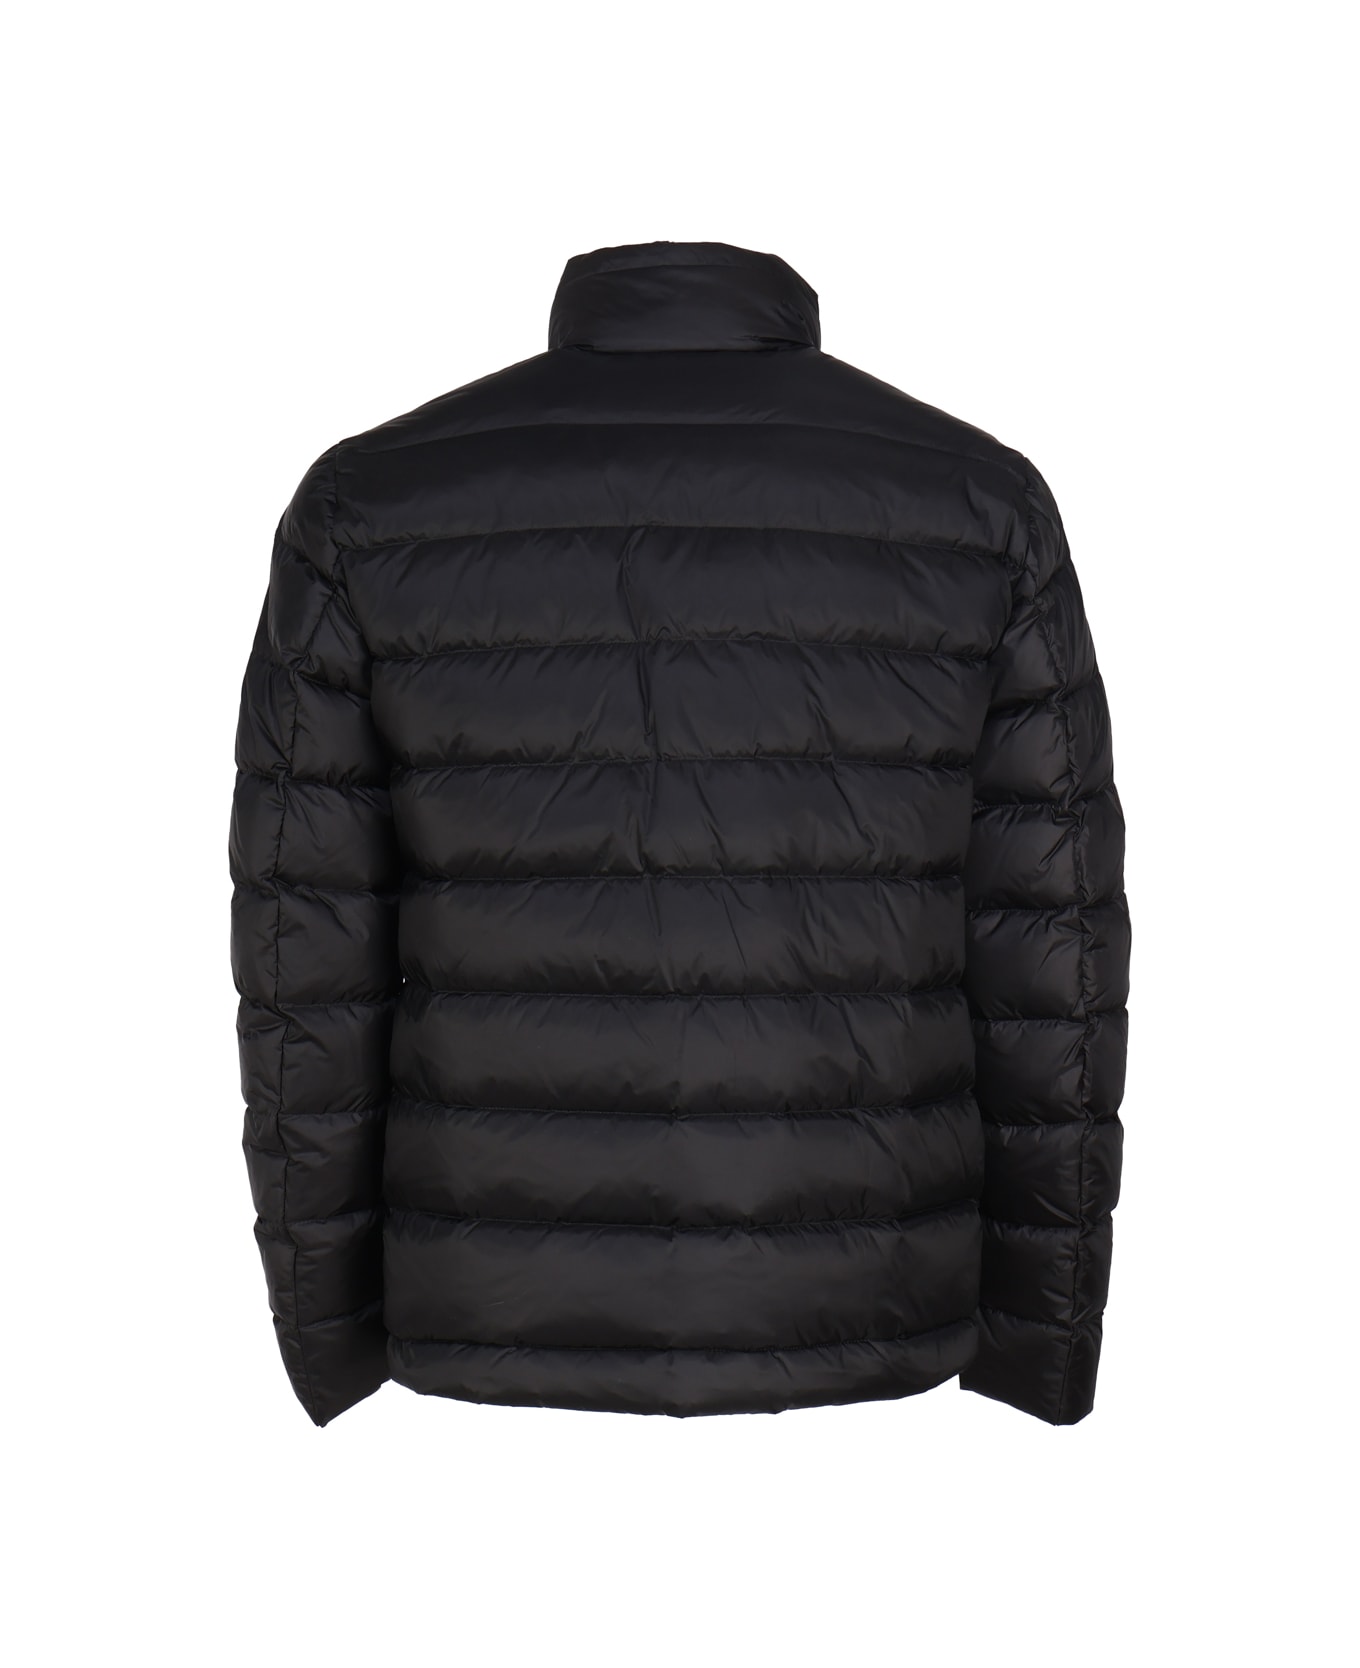 Blauer Nylon Down Jacket With Striped Stitching - Black